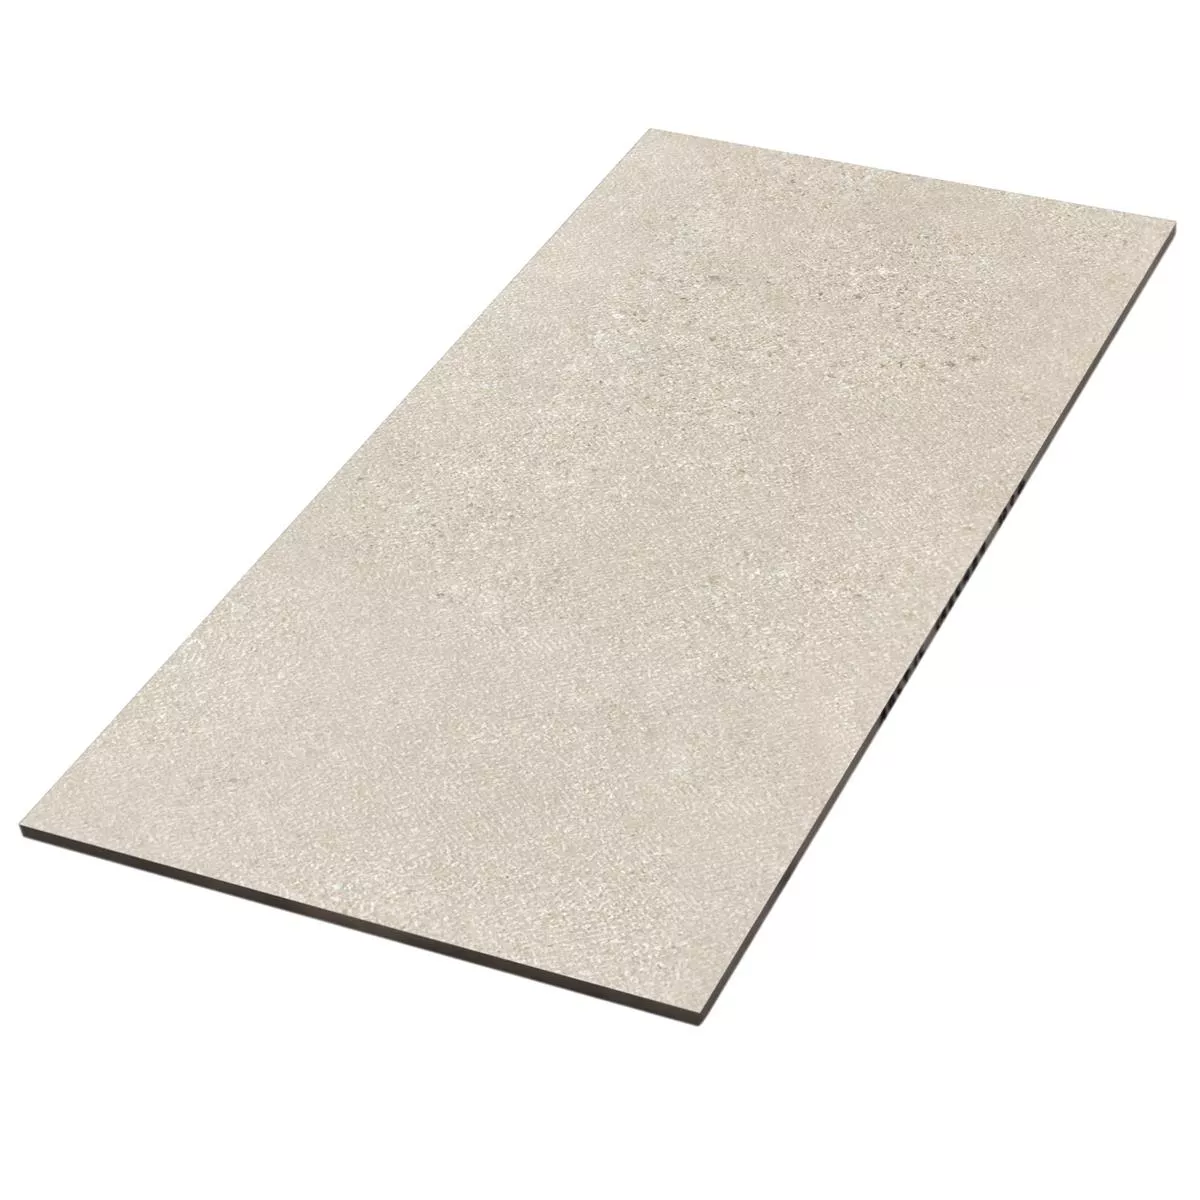 Sample Floor Tiles Galilea Unglazed R10B Beige 30x60cm